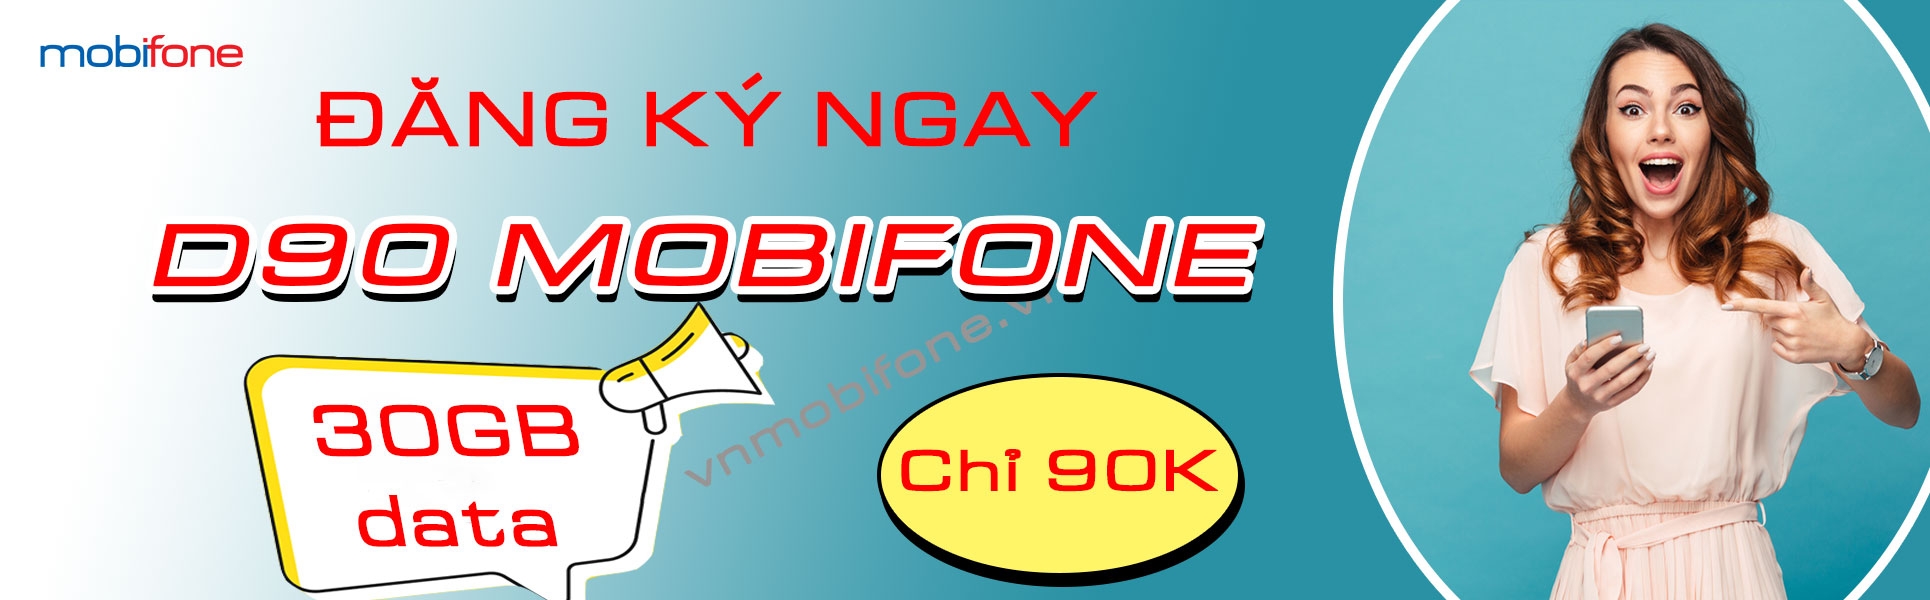 dang-ky-d90-mobifone